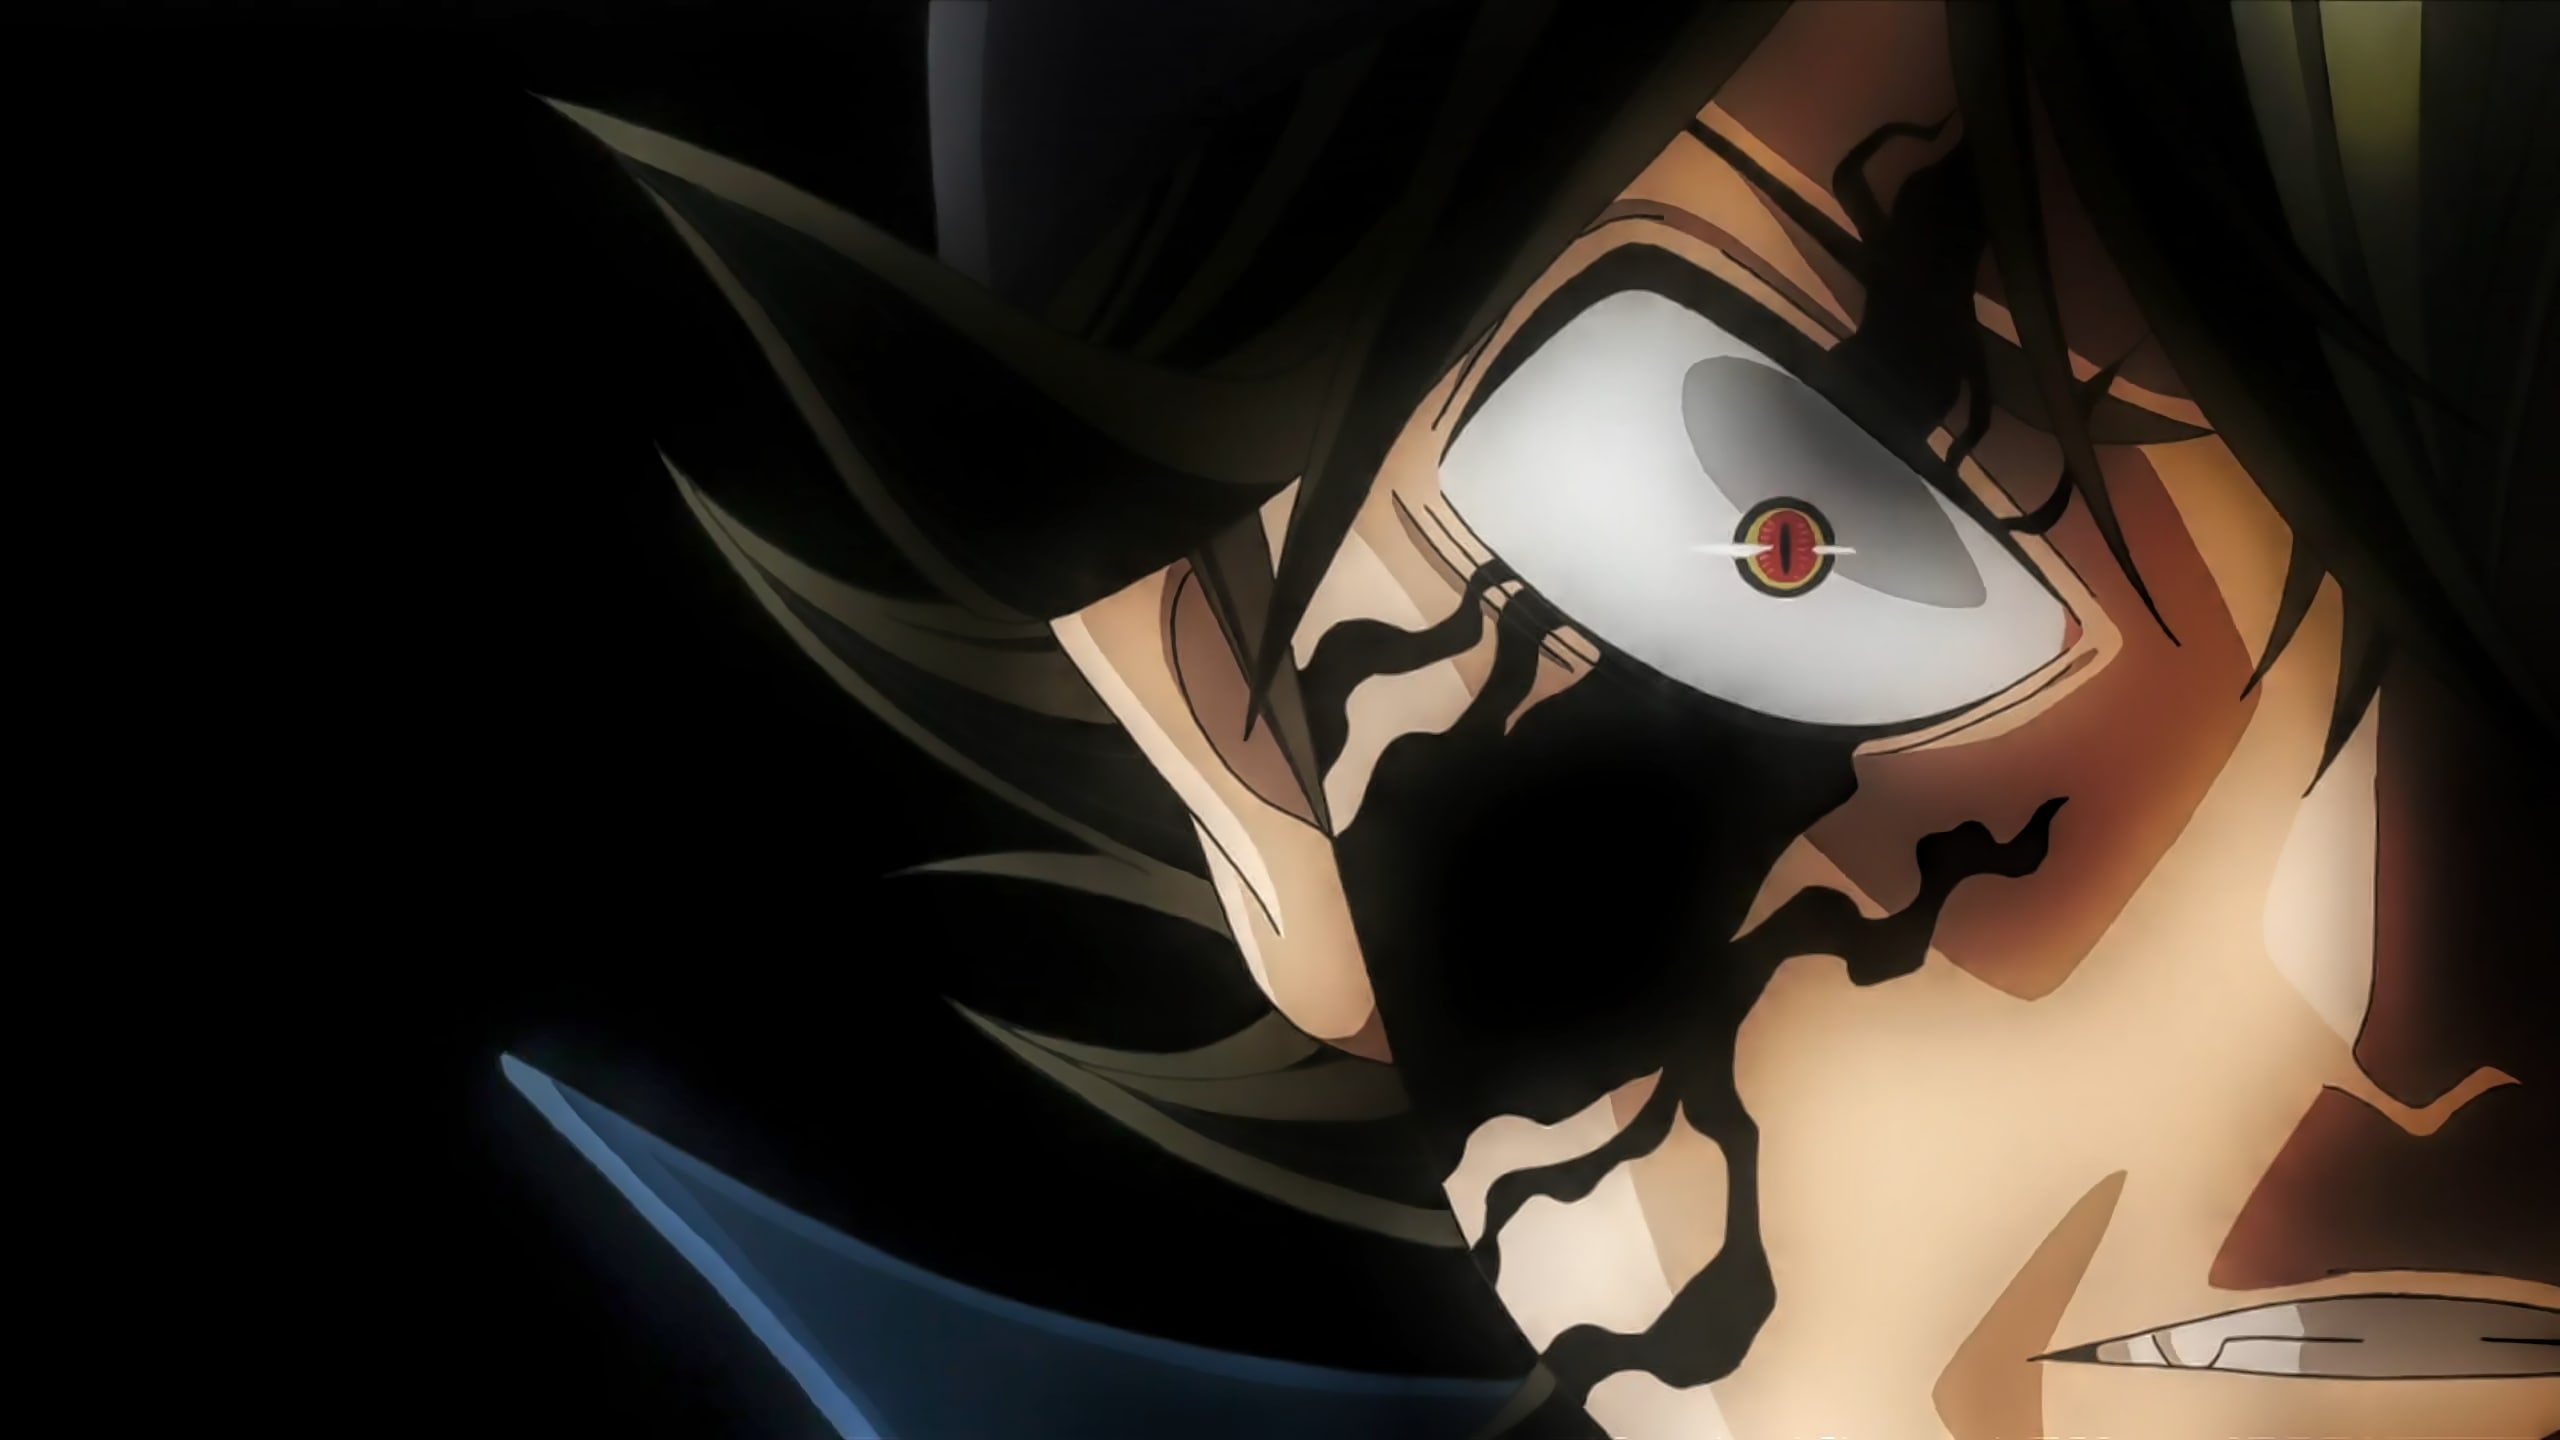 Wallpaper of Anime Asta Black Clover Demon background HD image